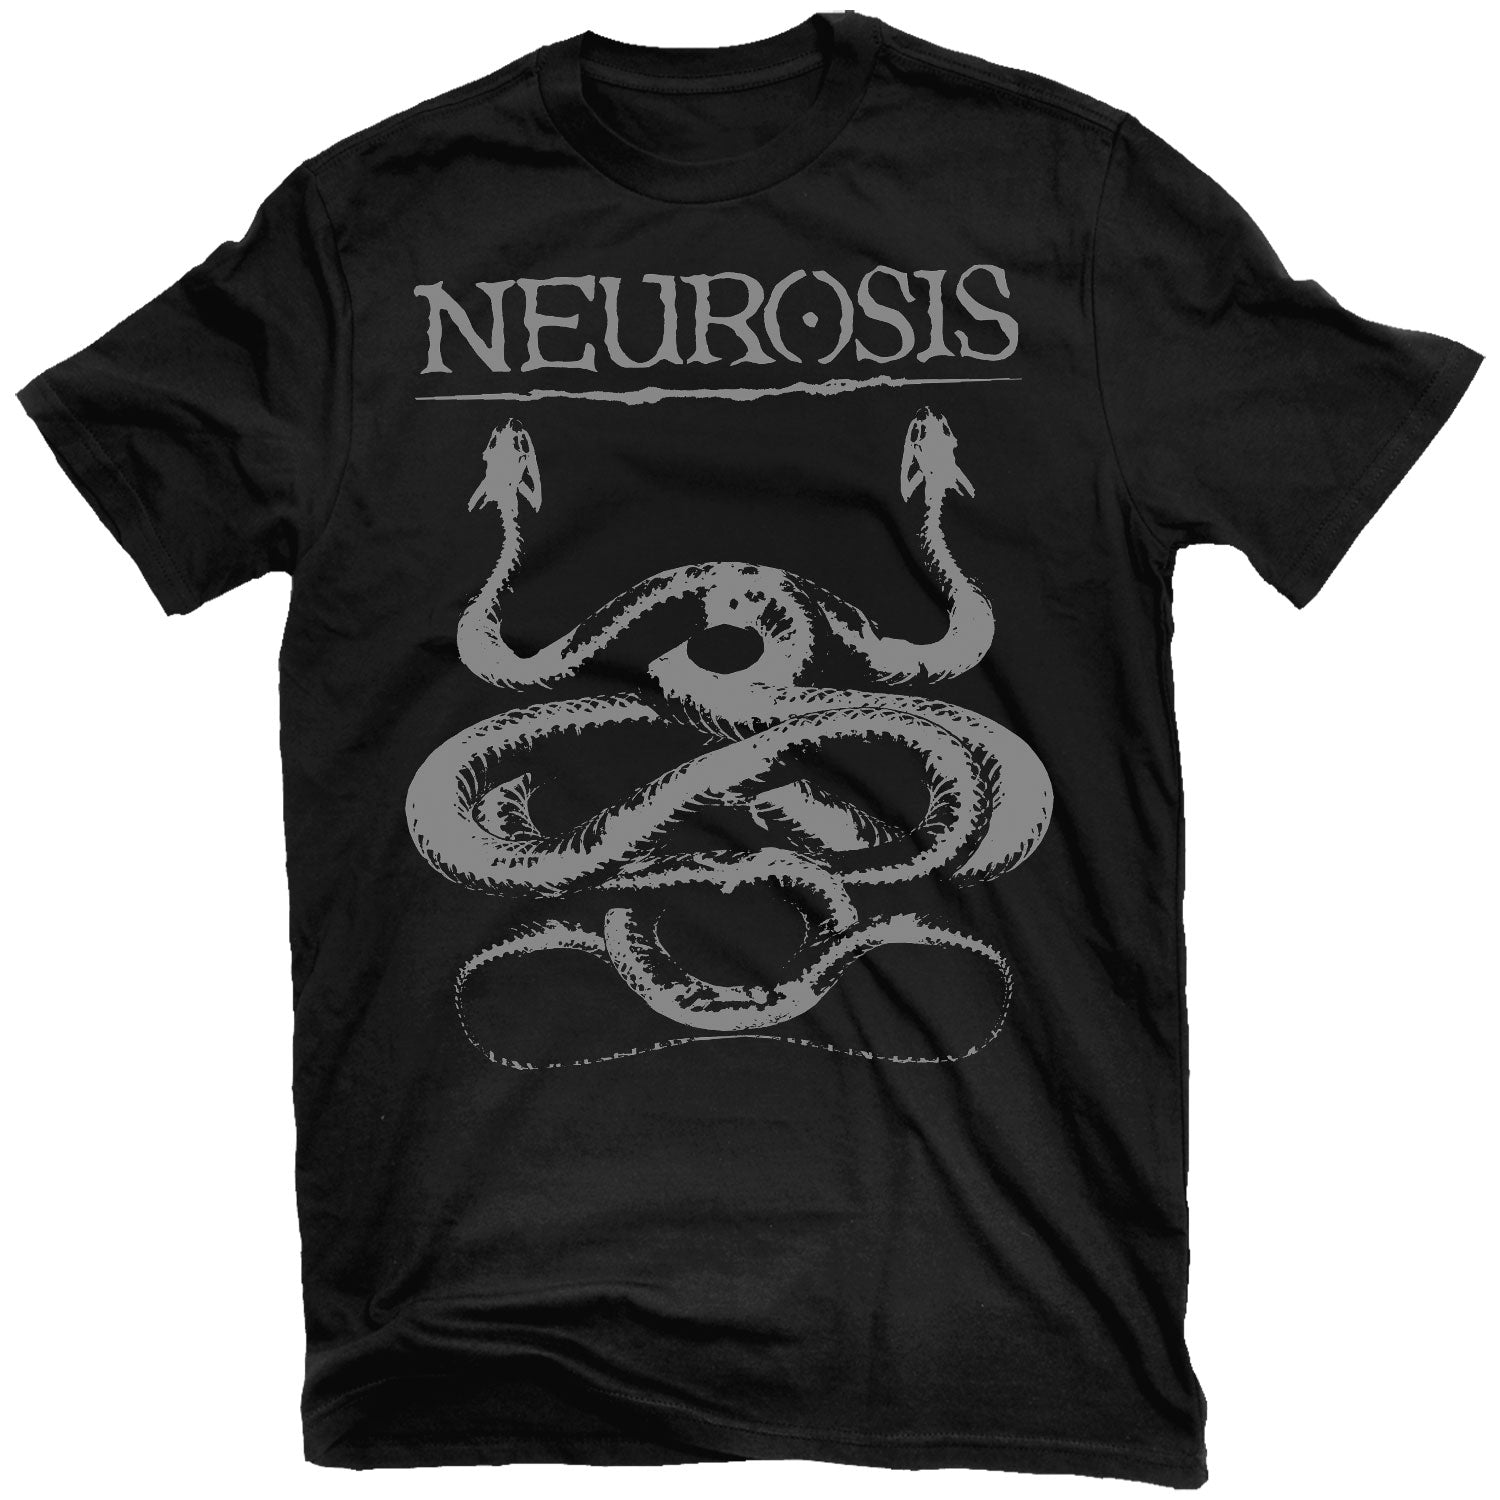 Neurosis "Snakes" T-Shirt